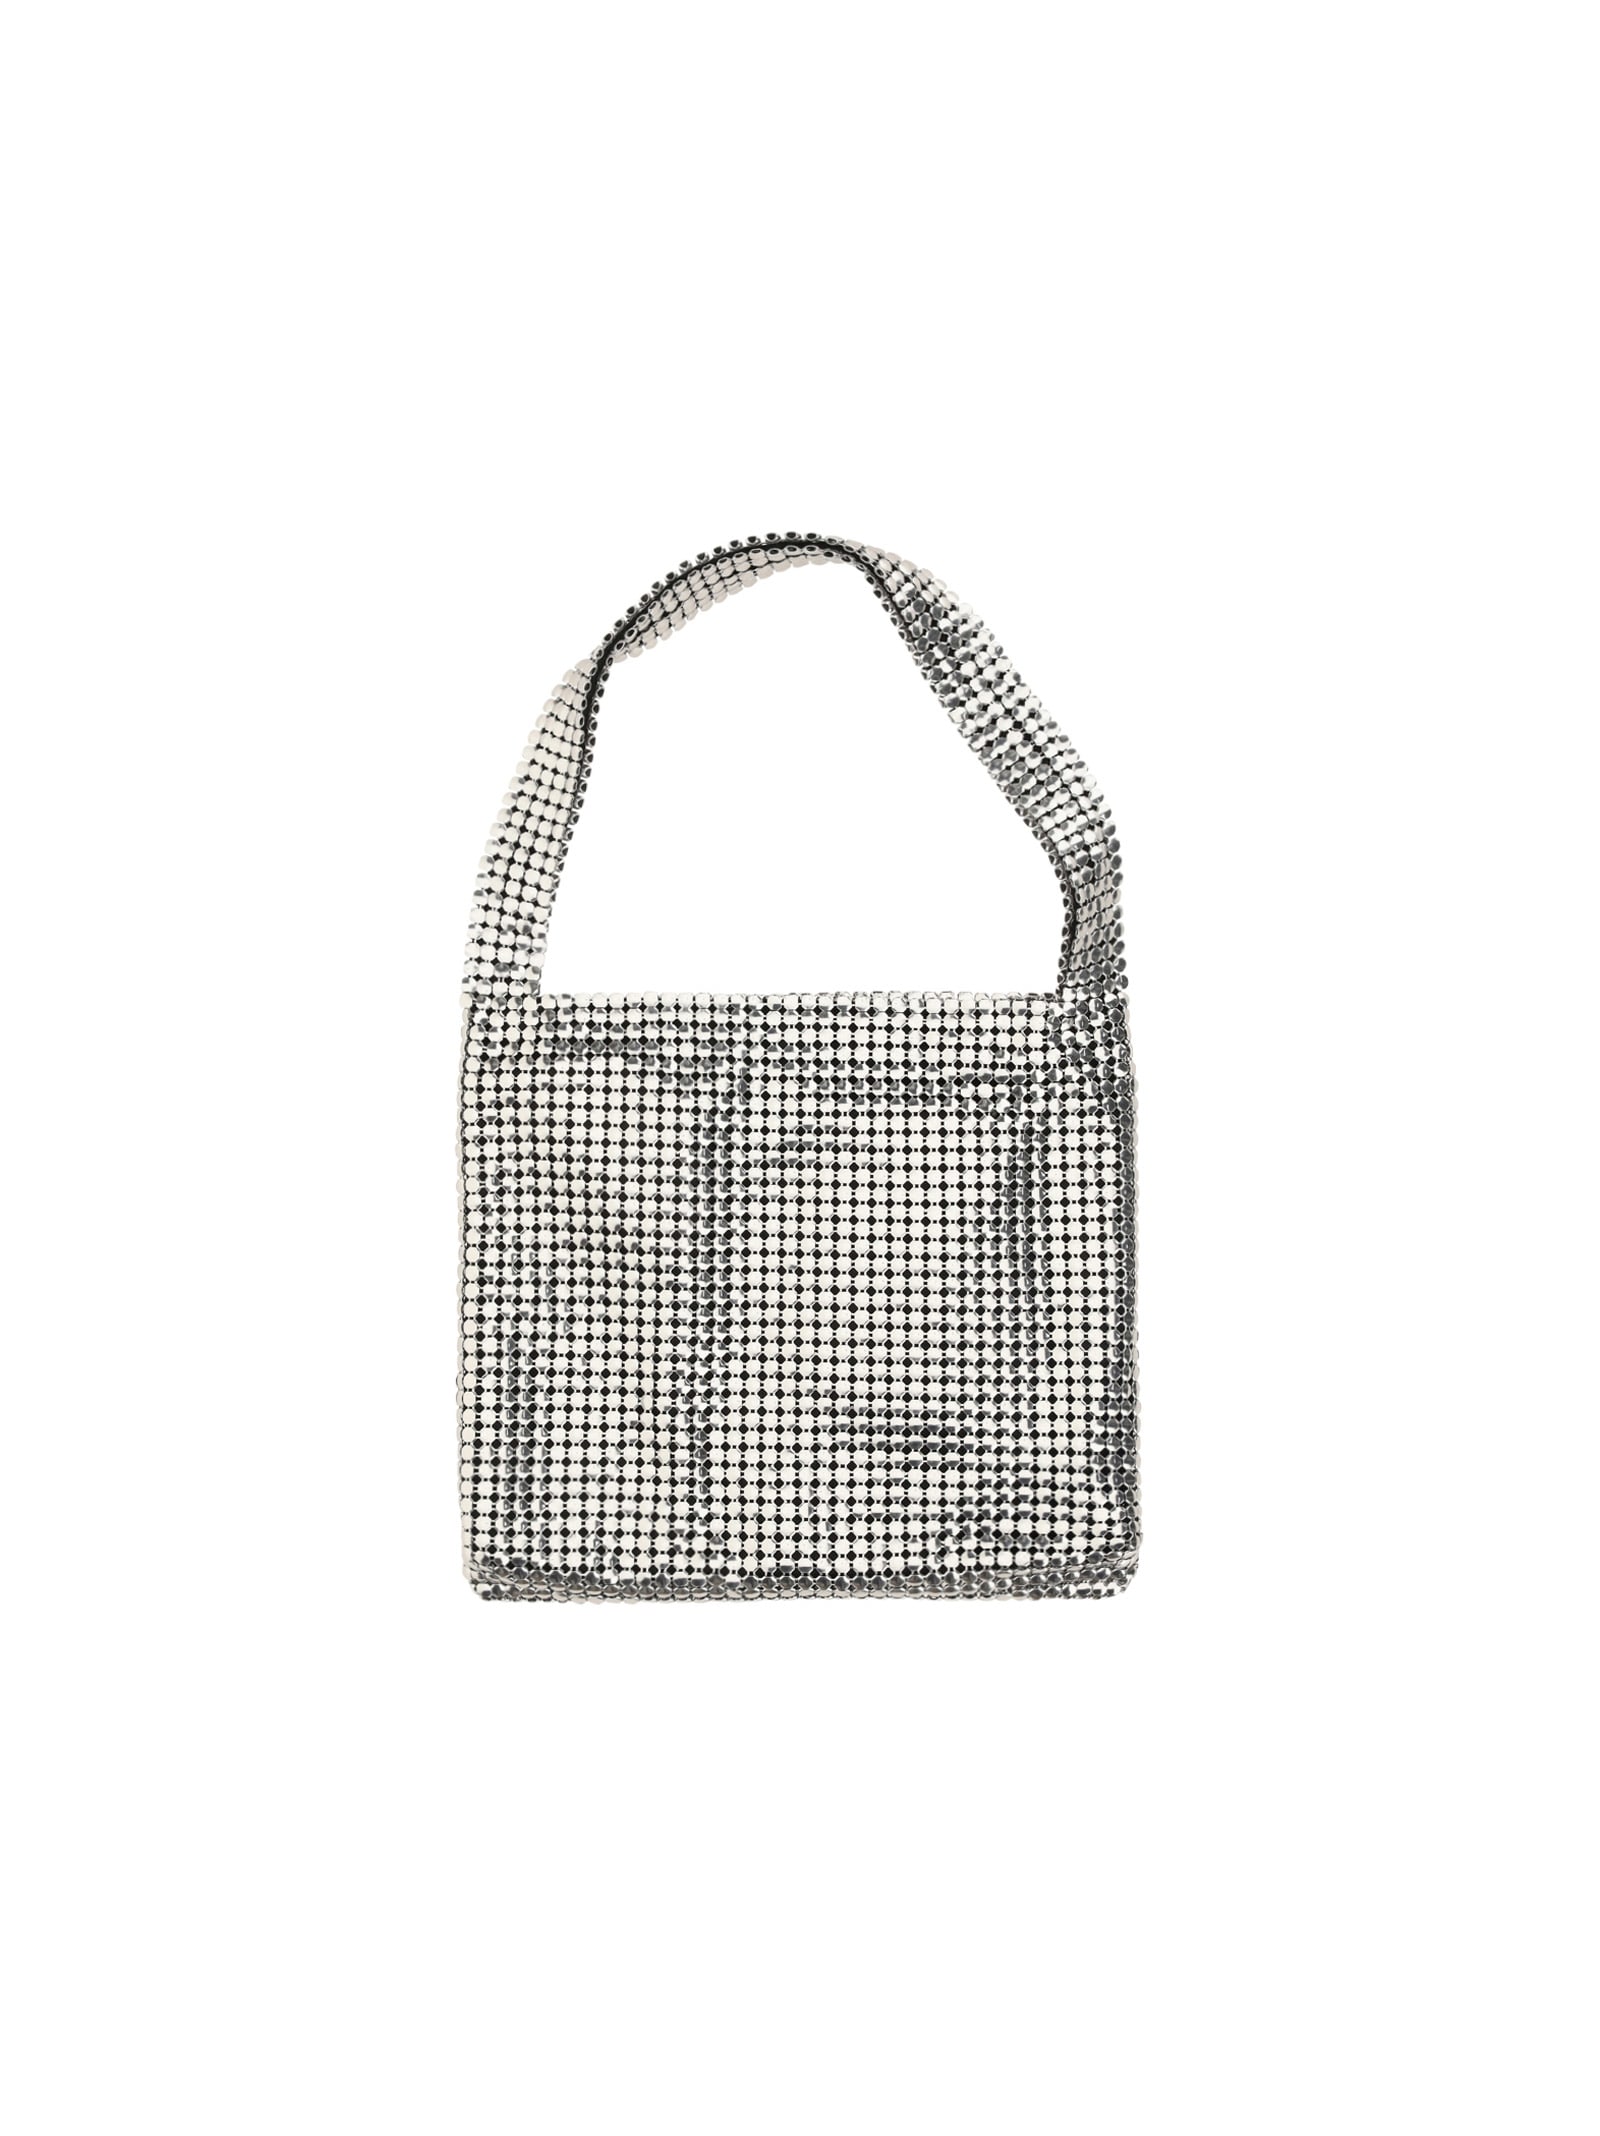 Paco Rabanne Pixel Handbag